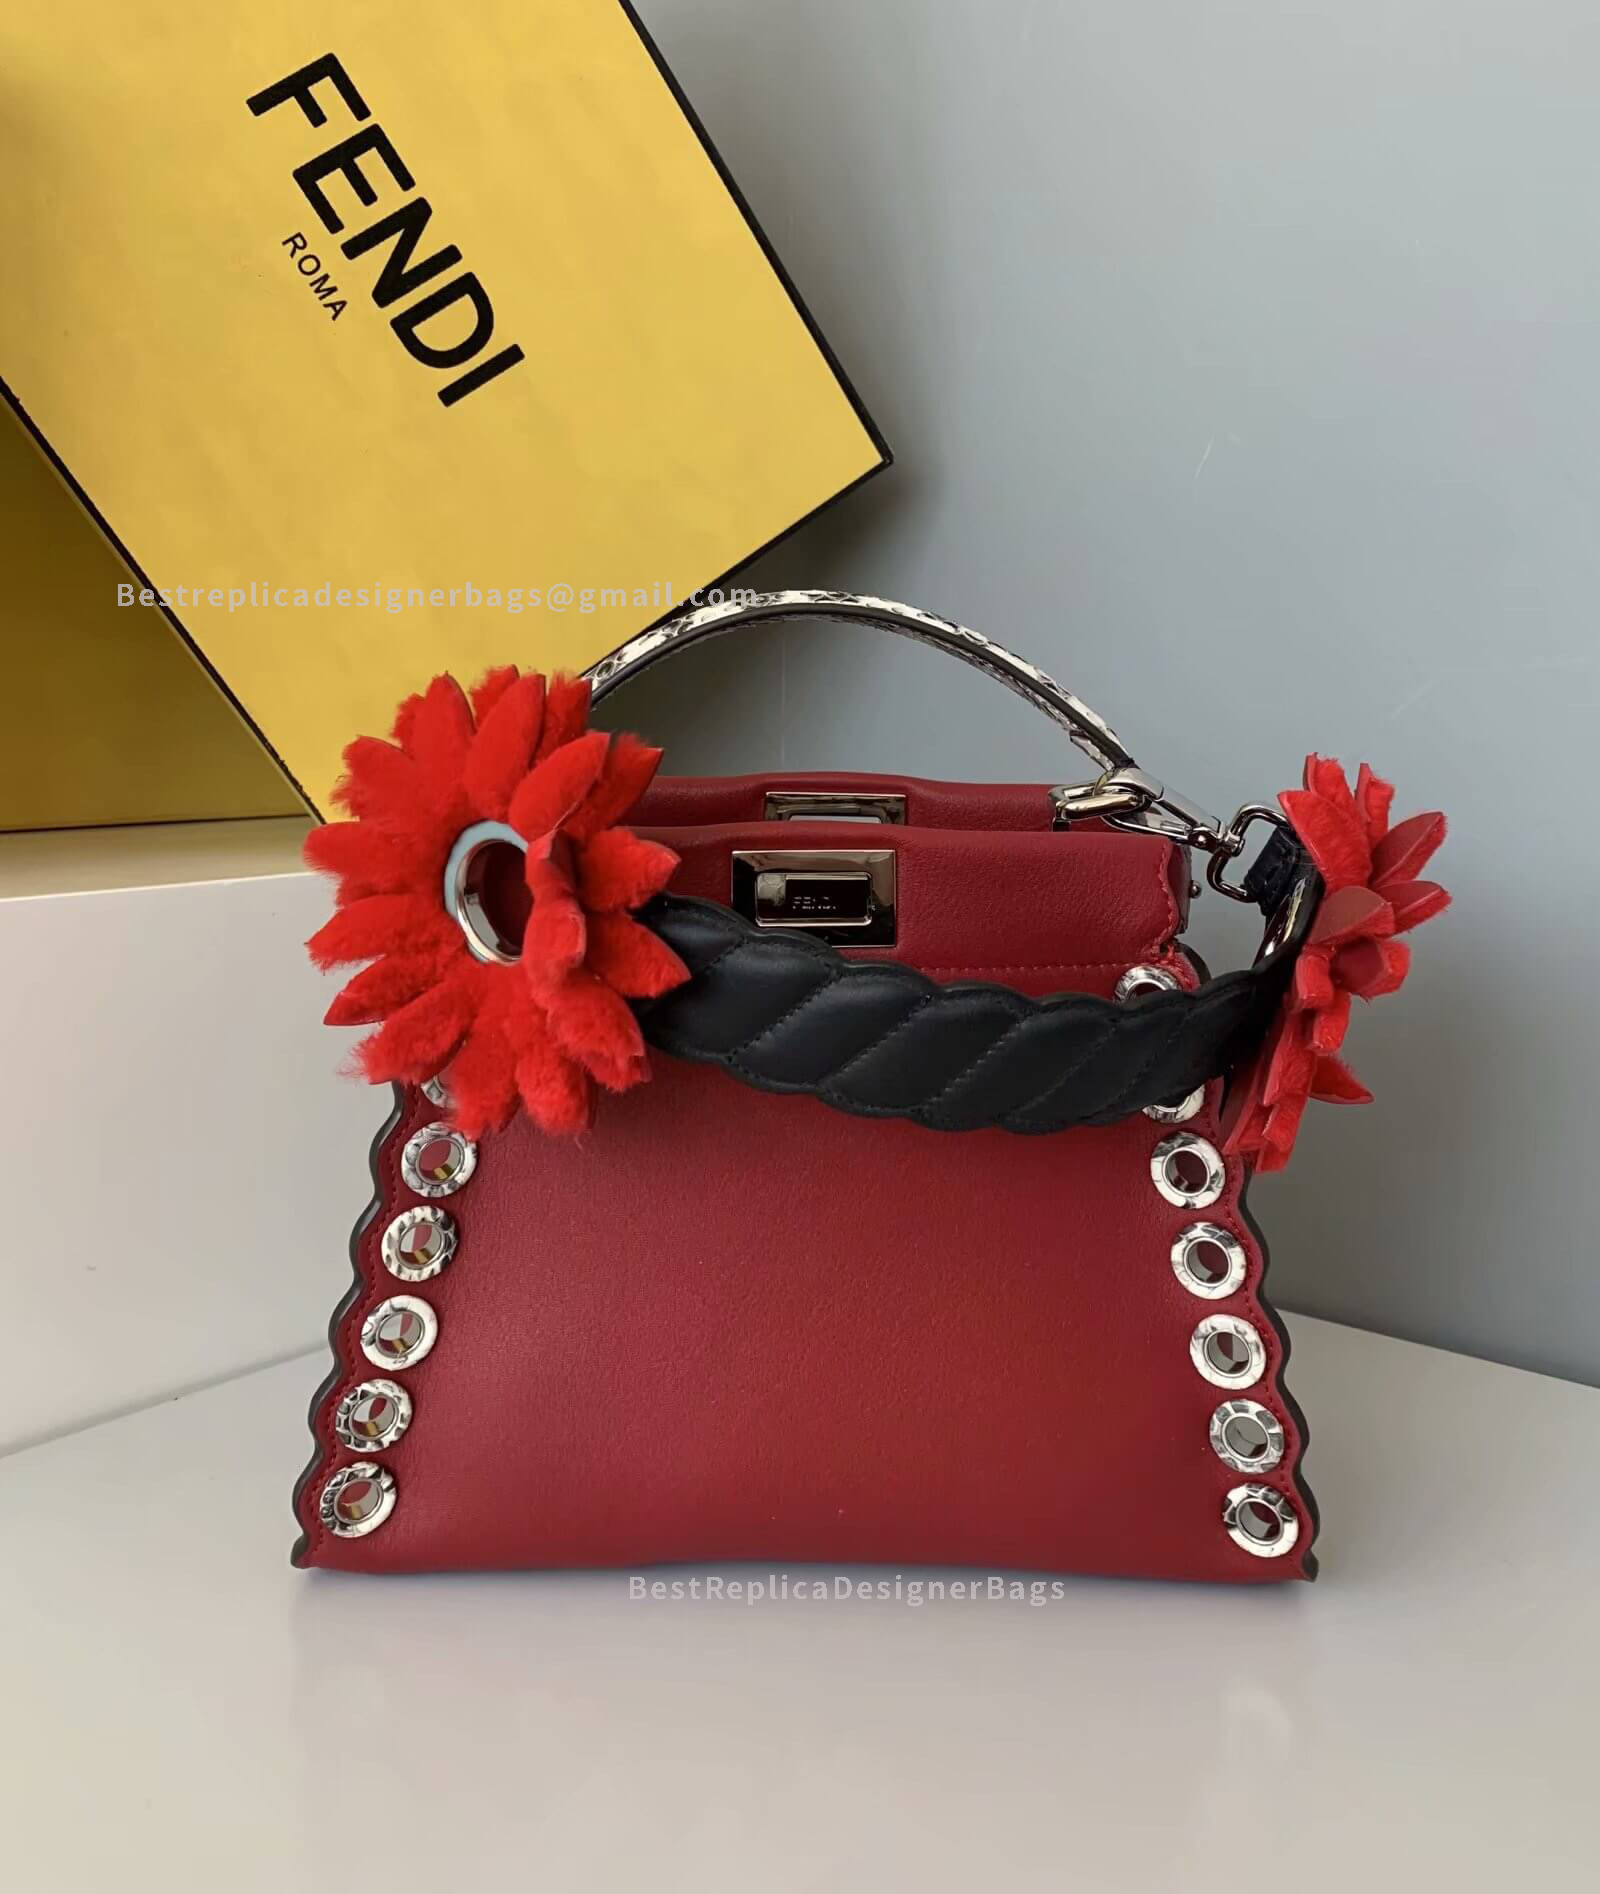 Fendi Peekaboo Iconic Mini Red Leather Bag 8106S